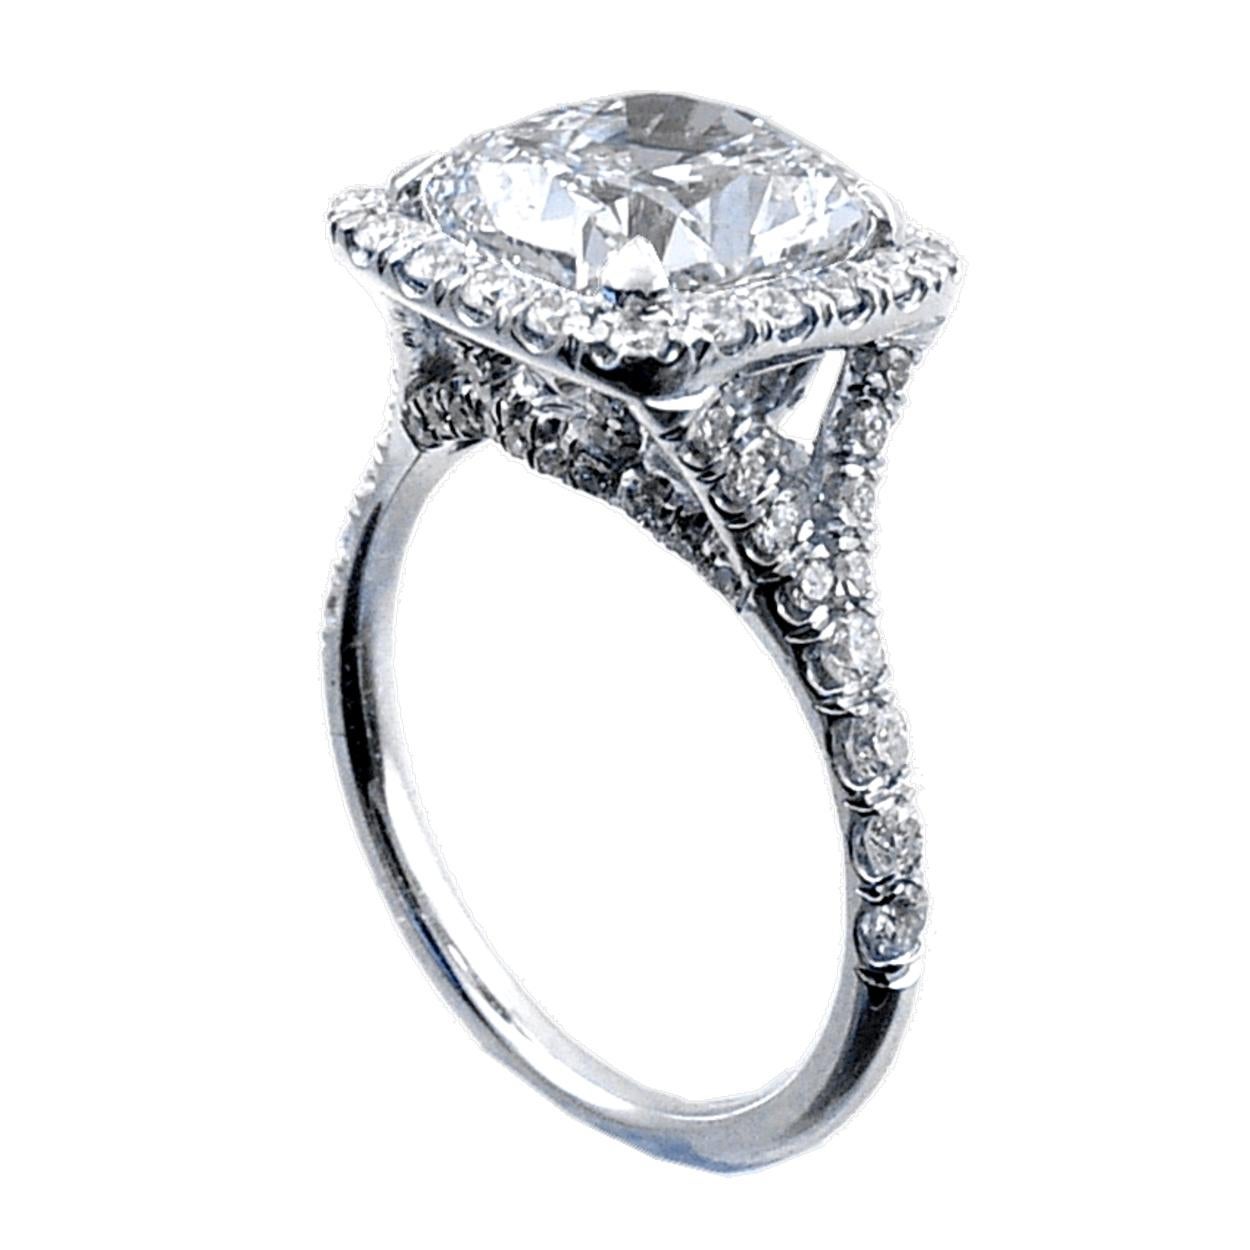 Contemporary EGL US 4.06 Carat K/SI1 Cushion Platinum Pave Set Diamond Ring with Halo